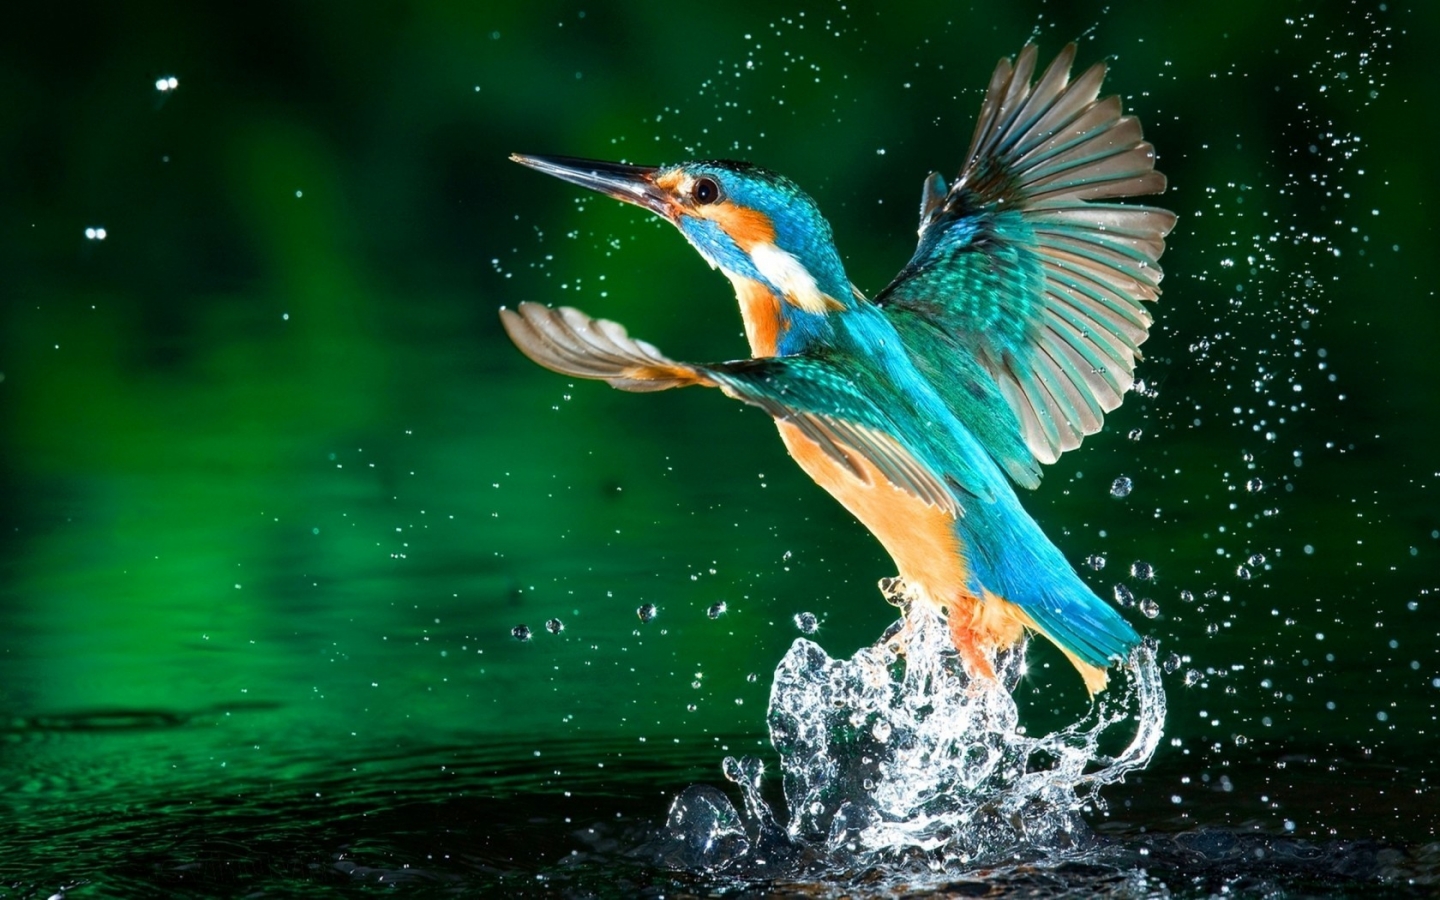 Kingfisher Bird for 1440 x 900 widescreen resolution